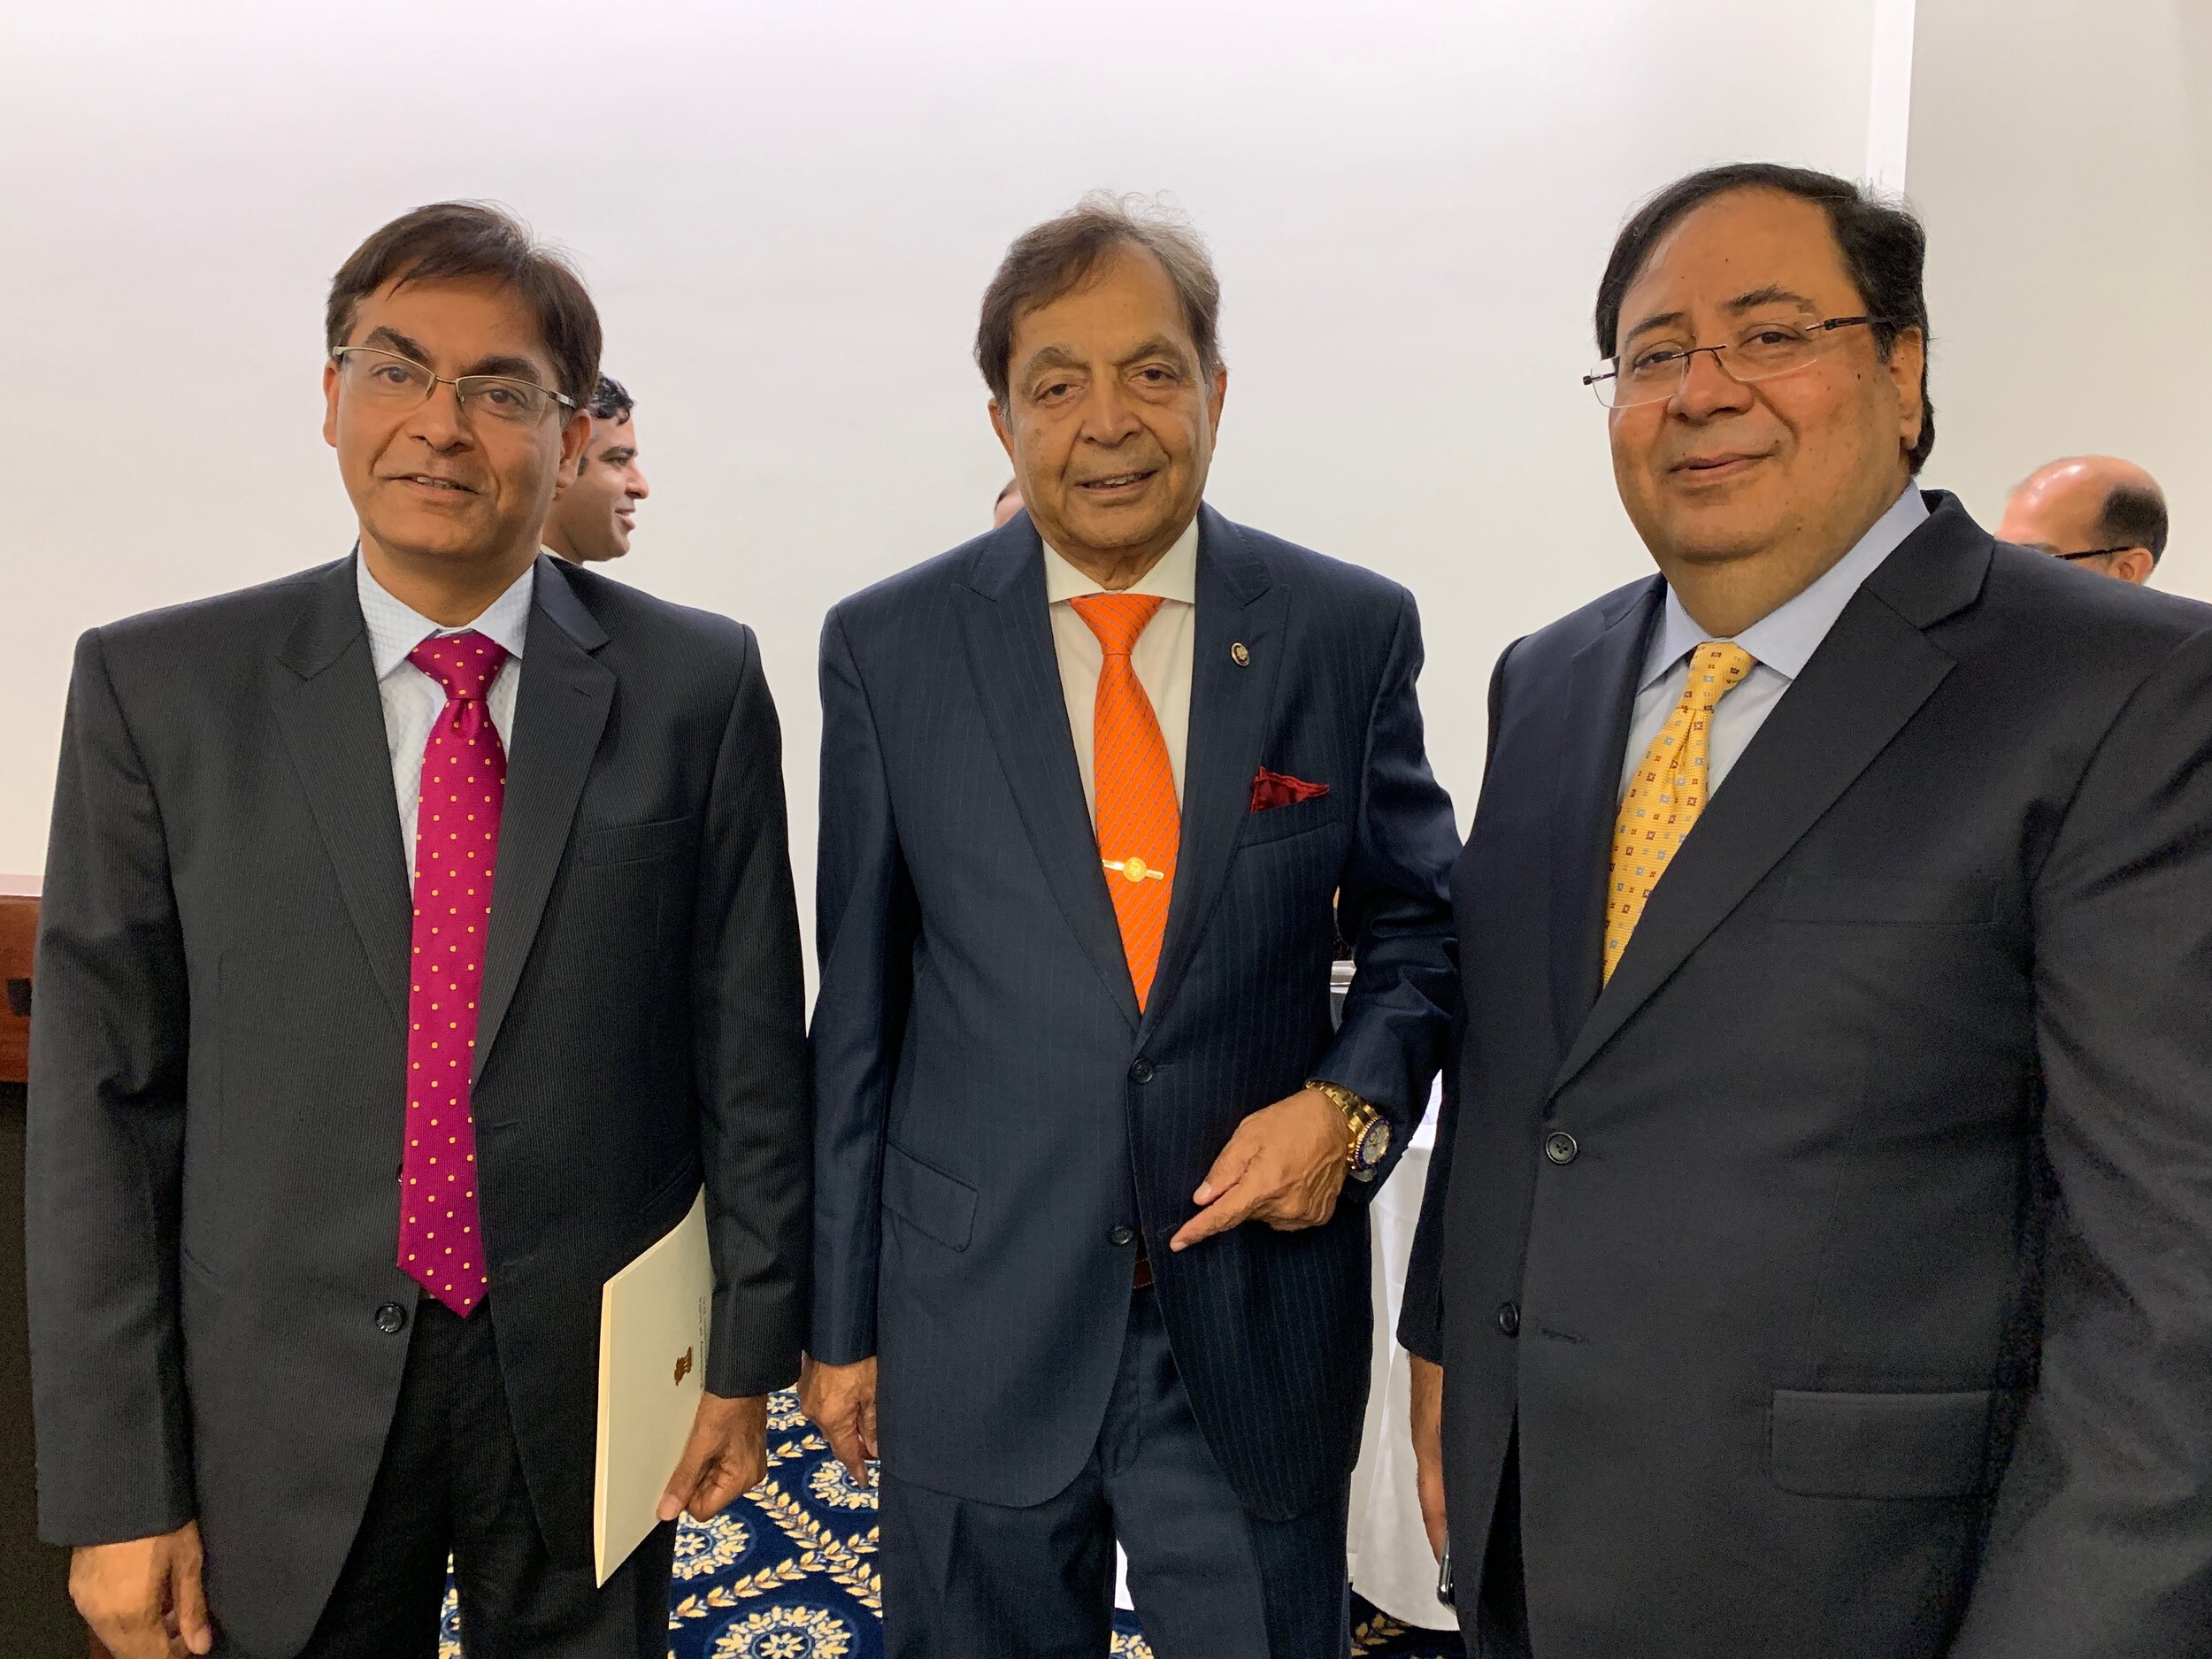   From Left to Right:  Mr. Amit Kumar (Deputy Chief of Mission, Embassy of India), Dr. Sampat Shivangi (Advisory Board Member - RealAssets), Mr. Suresh Nichani (Chairman-RealAssets) 